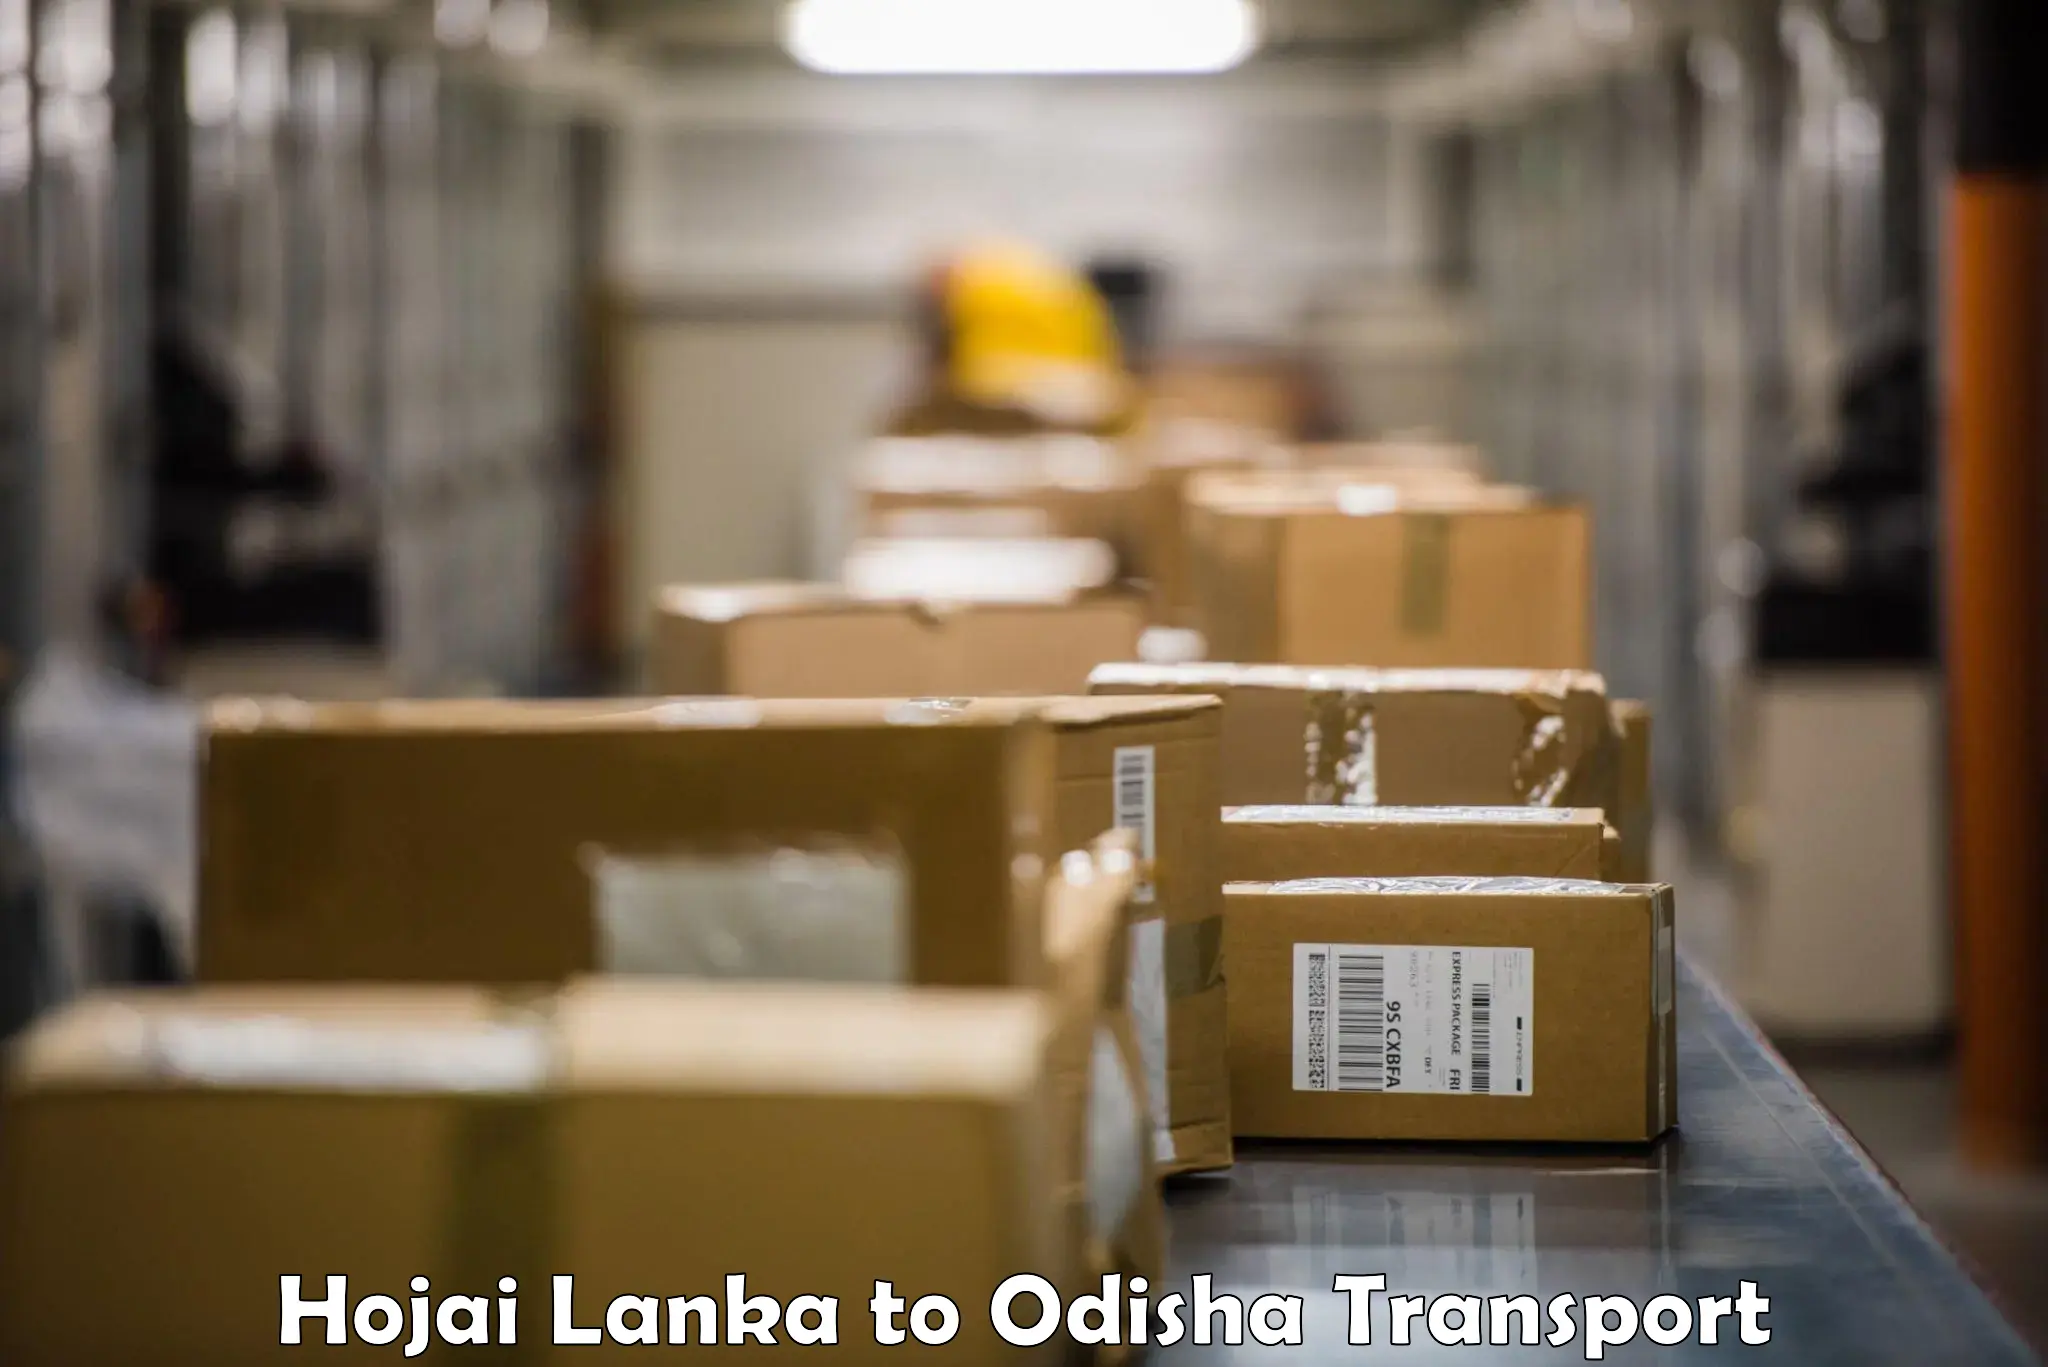 Furniture transport service Hojai Lanka to Udala